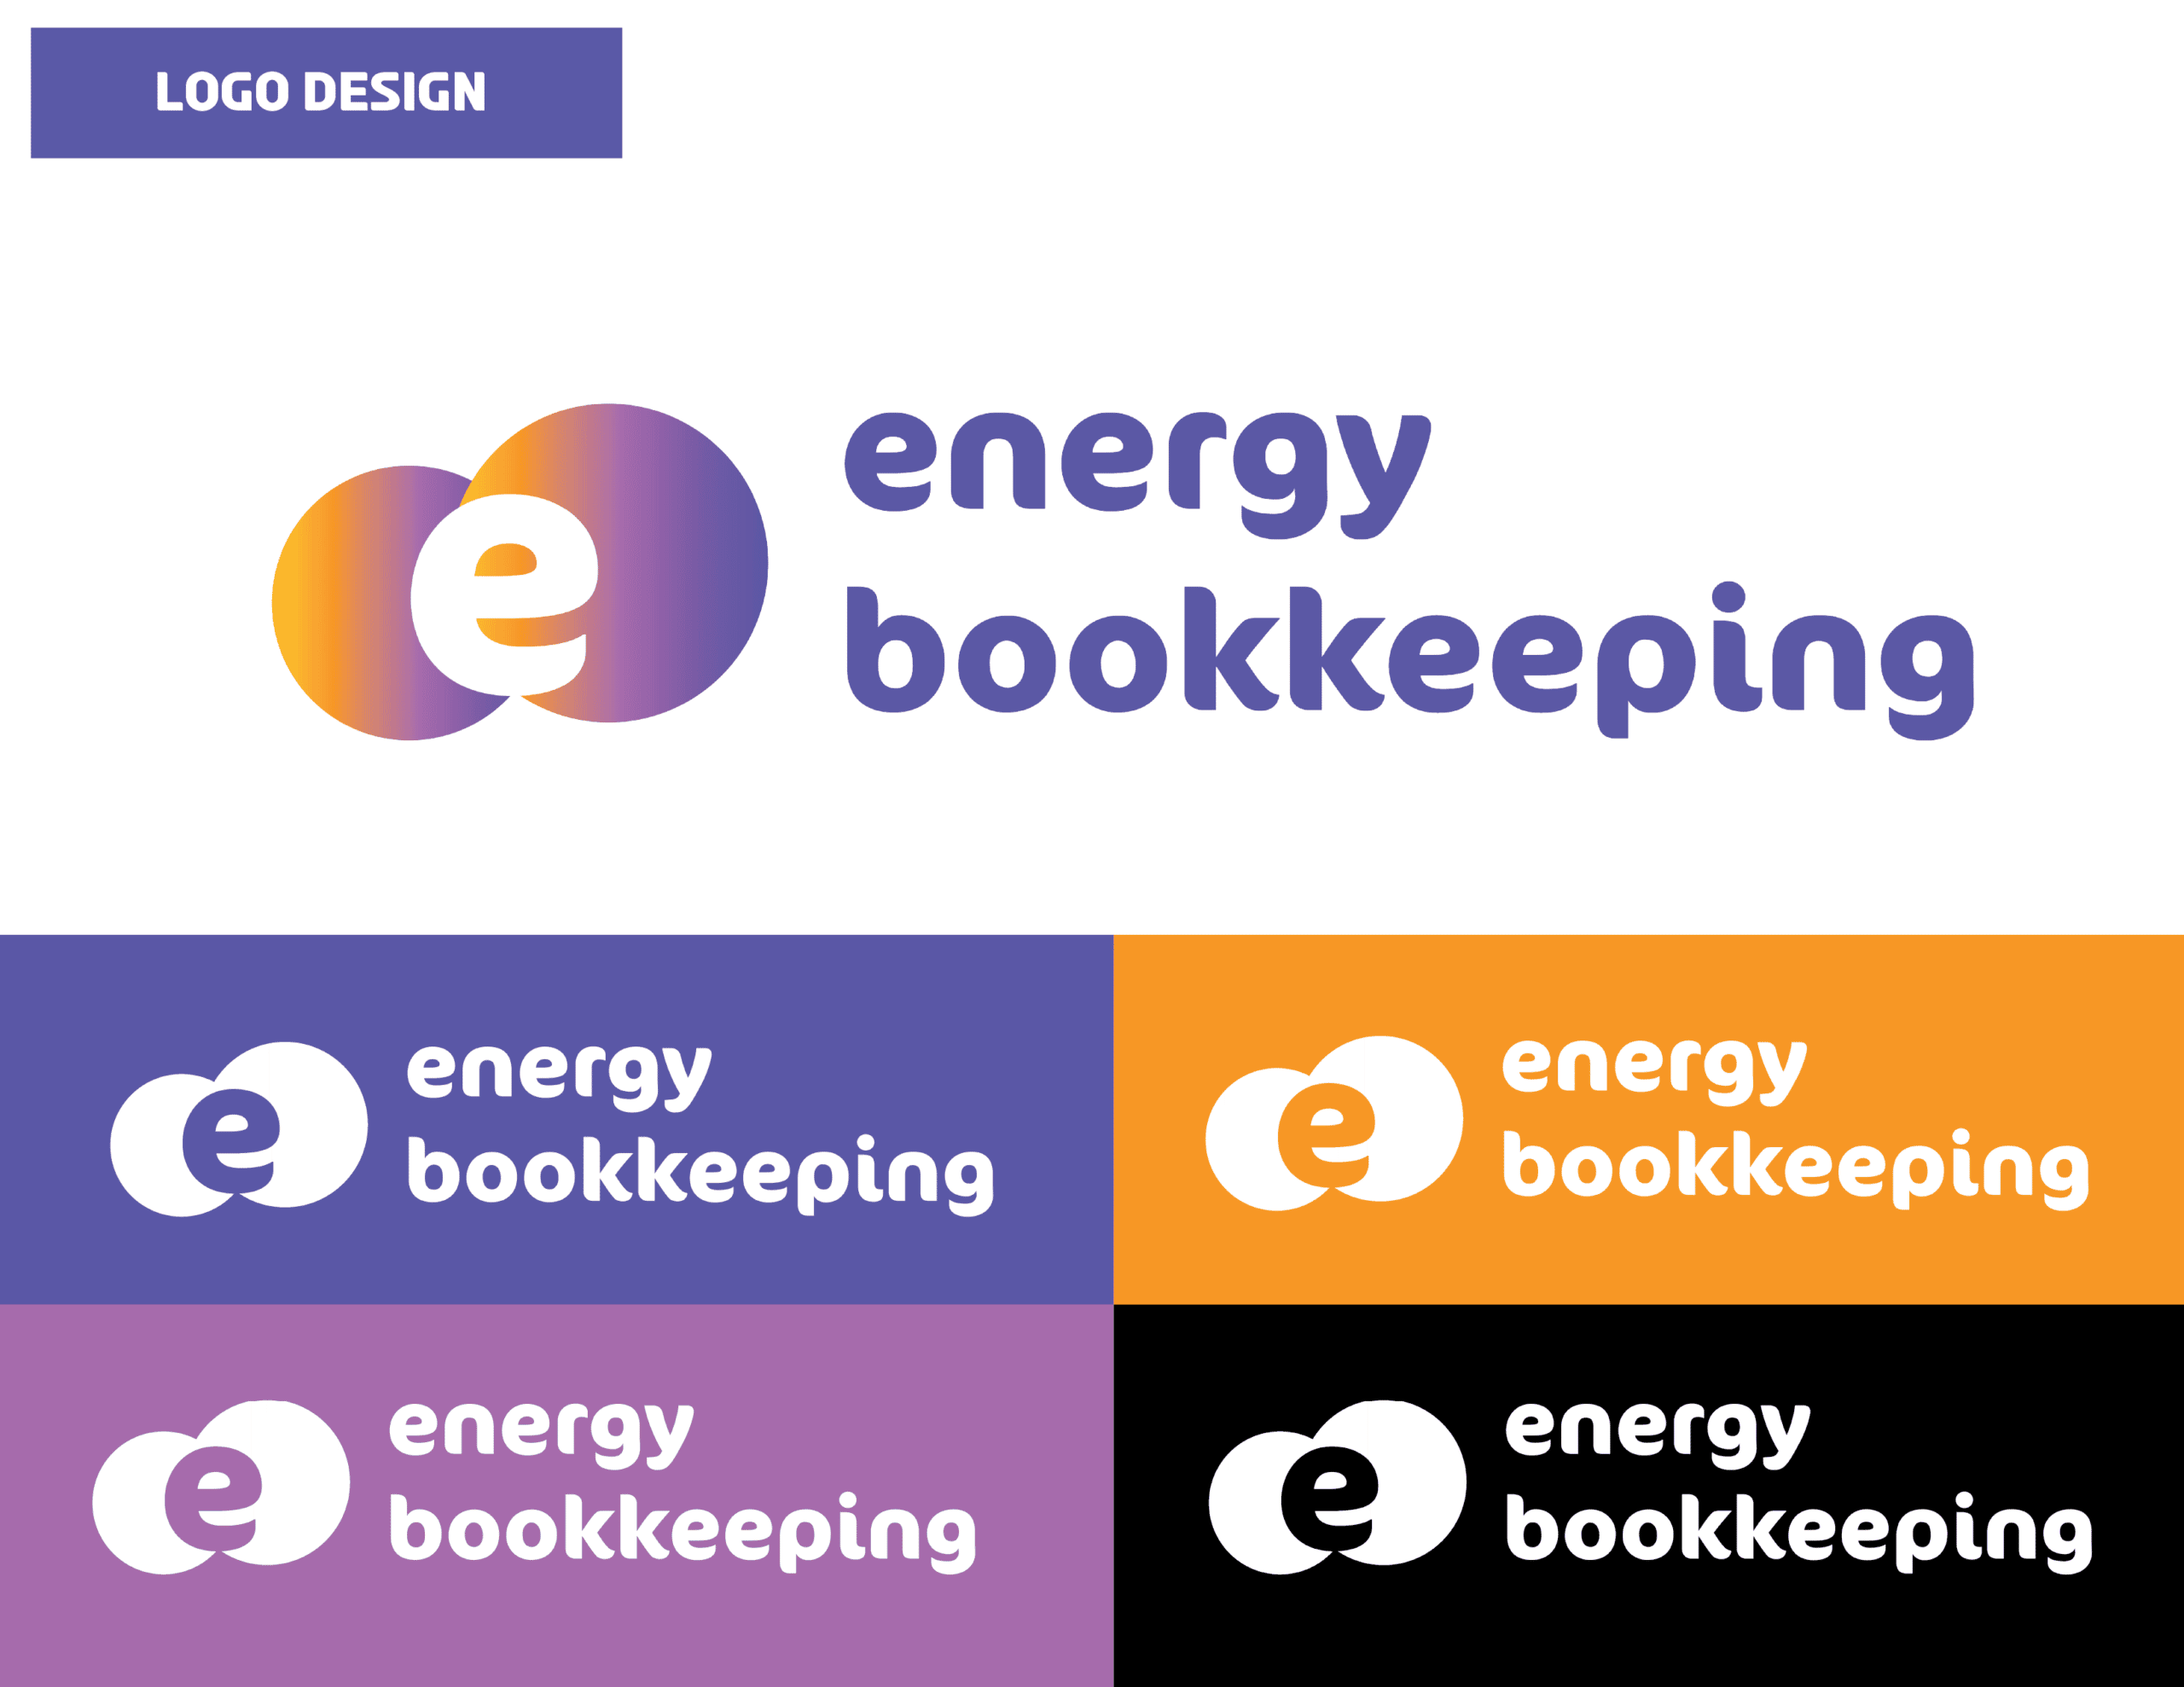 01_EnergyBookkeeping_Logo Design